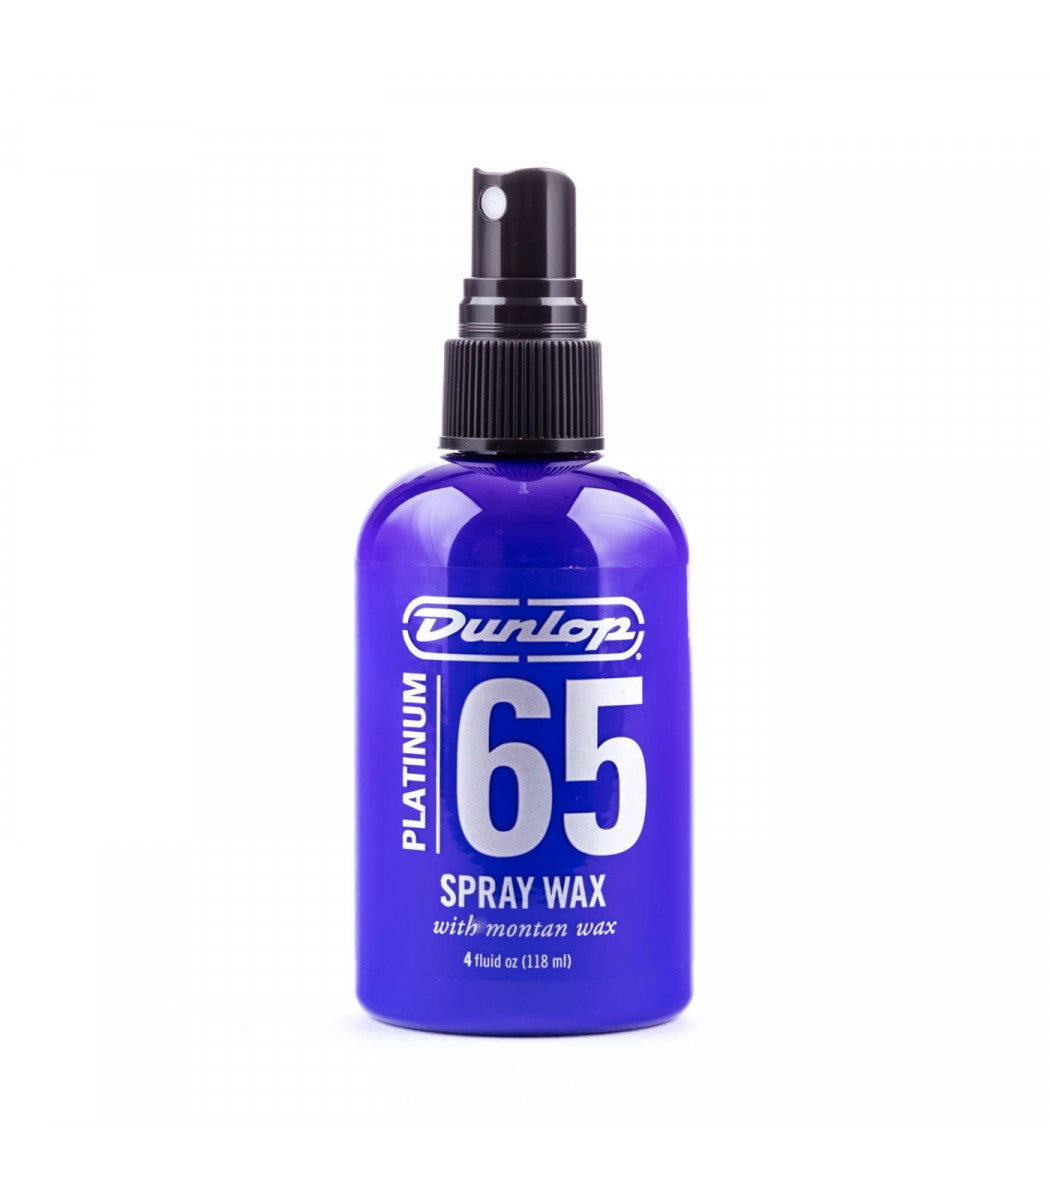 Dunlop Platinum 65 Spray Wax with Montan Wax